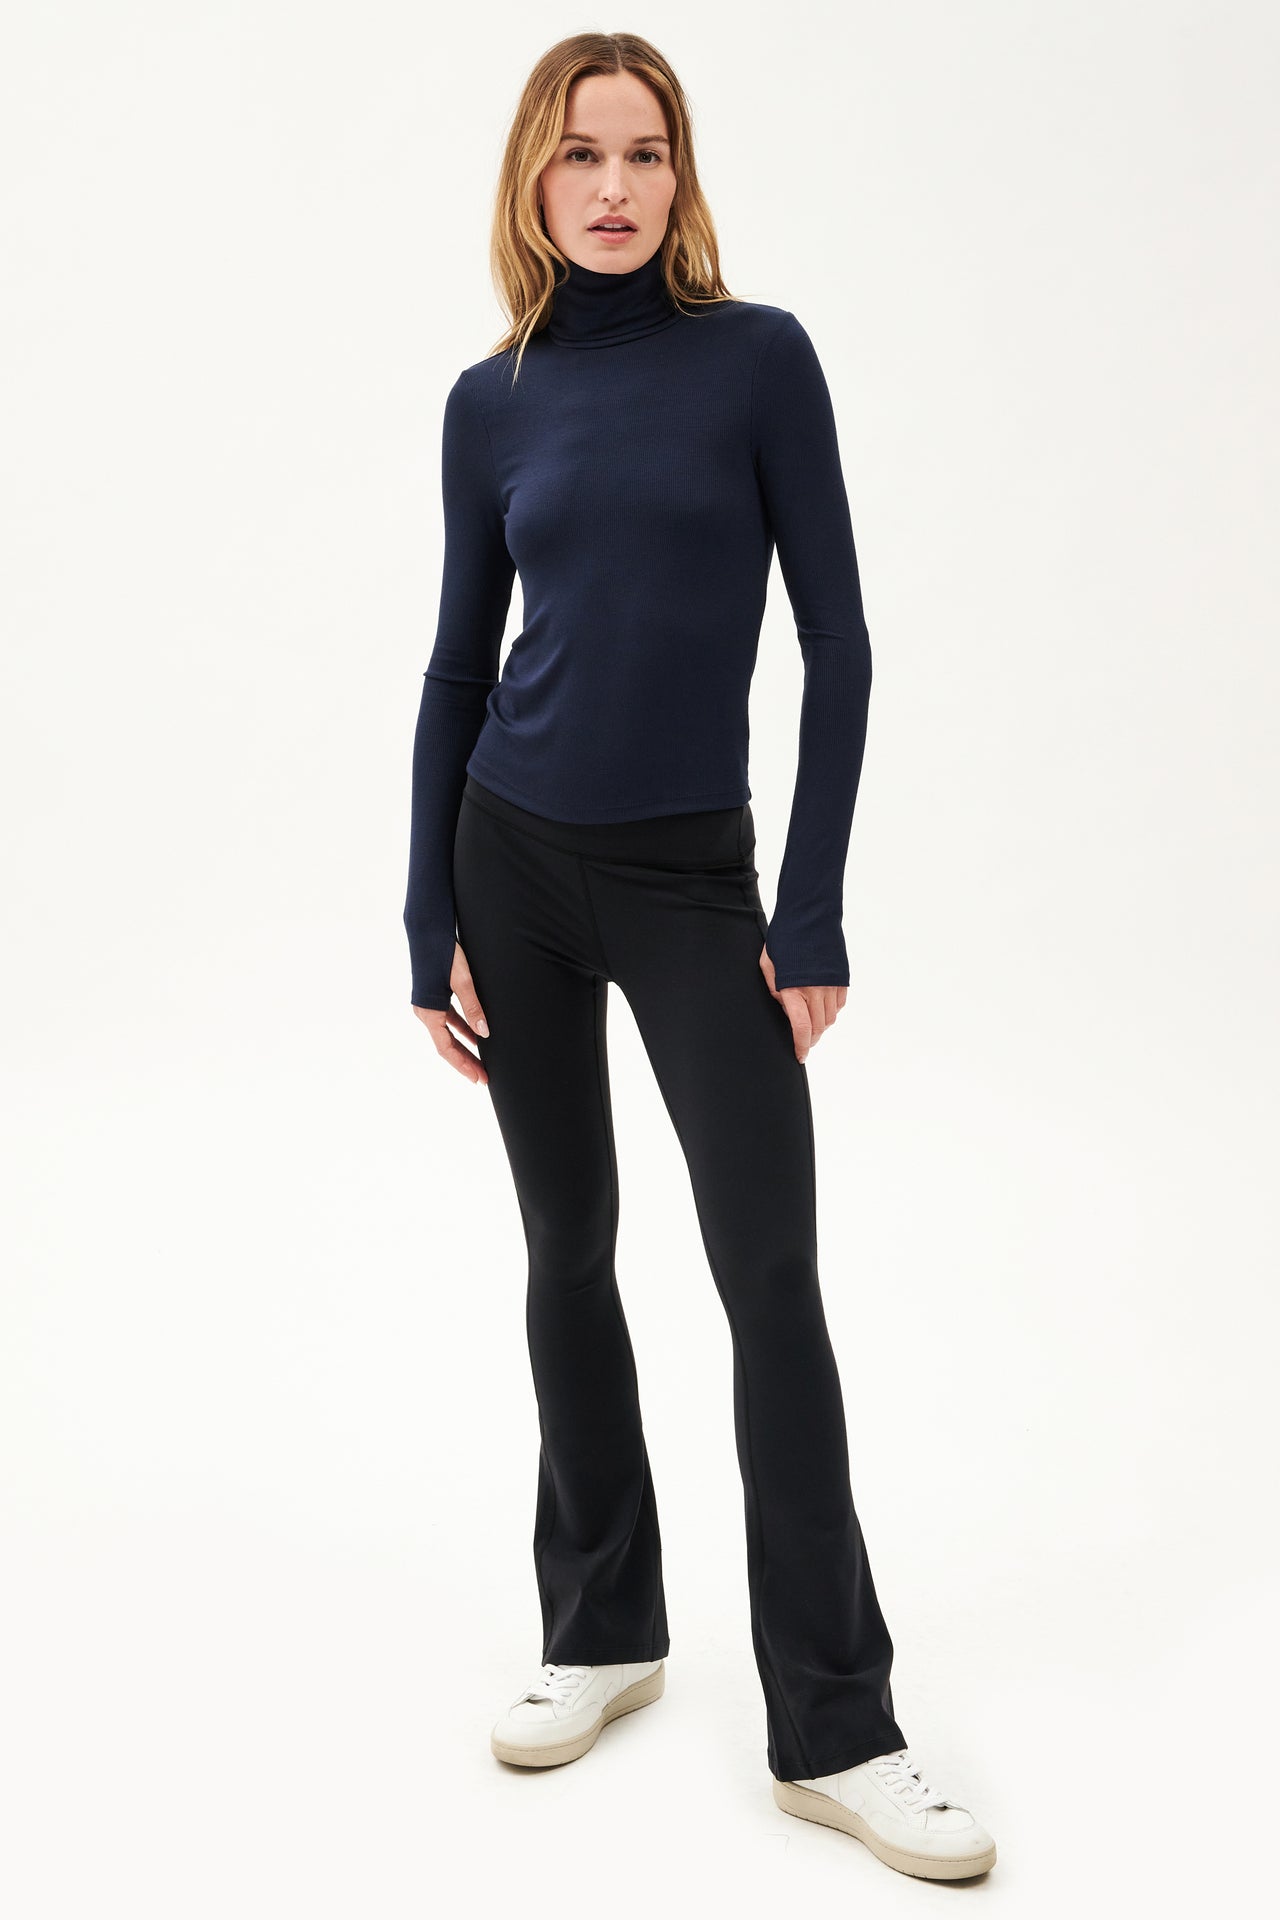 A woman wearing a SPLITS59 Jackson Rib Full Length Turtleneck in Indigo and black leggings for yoga.